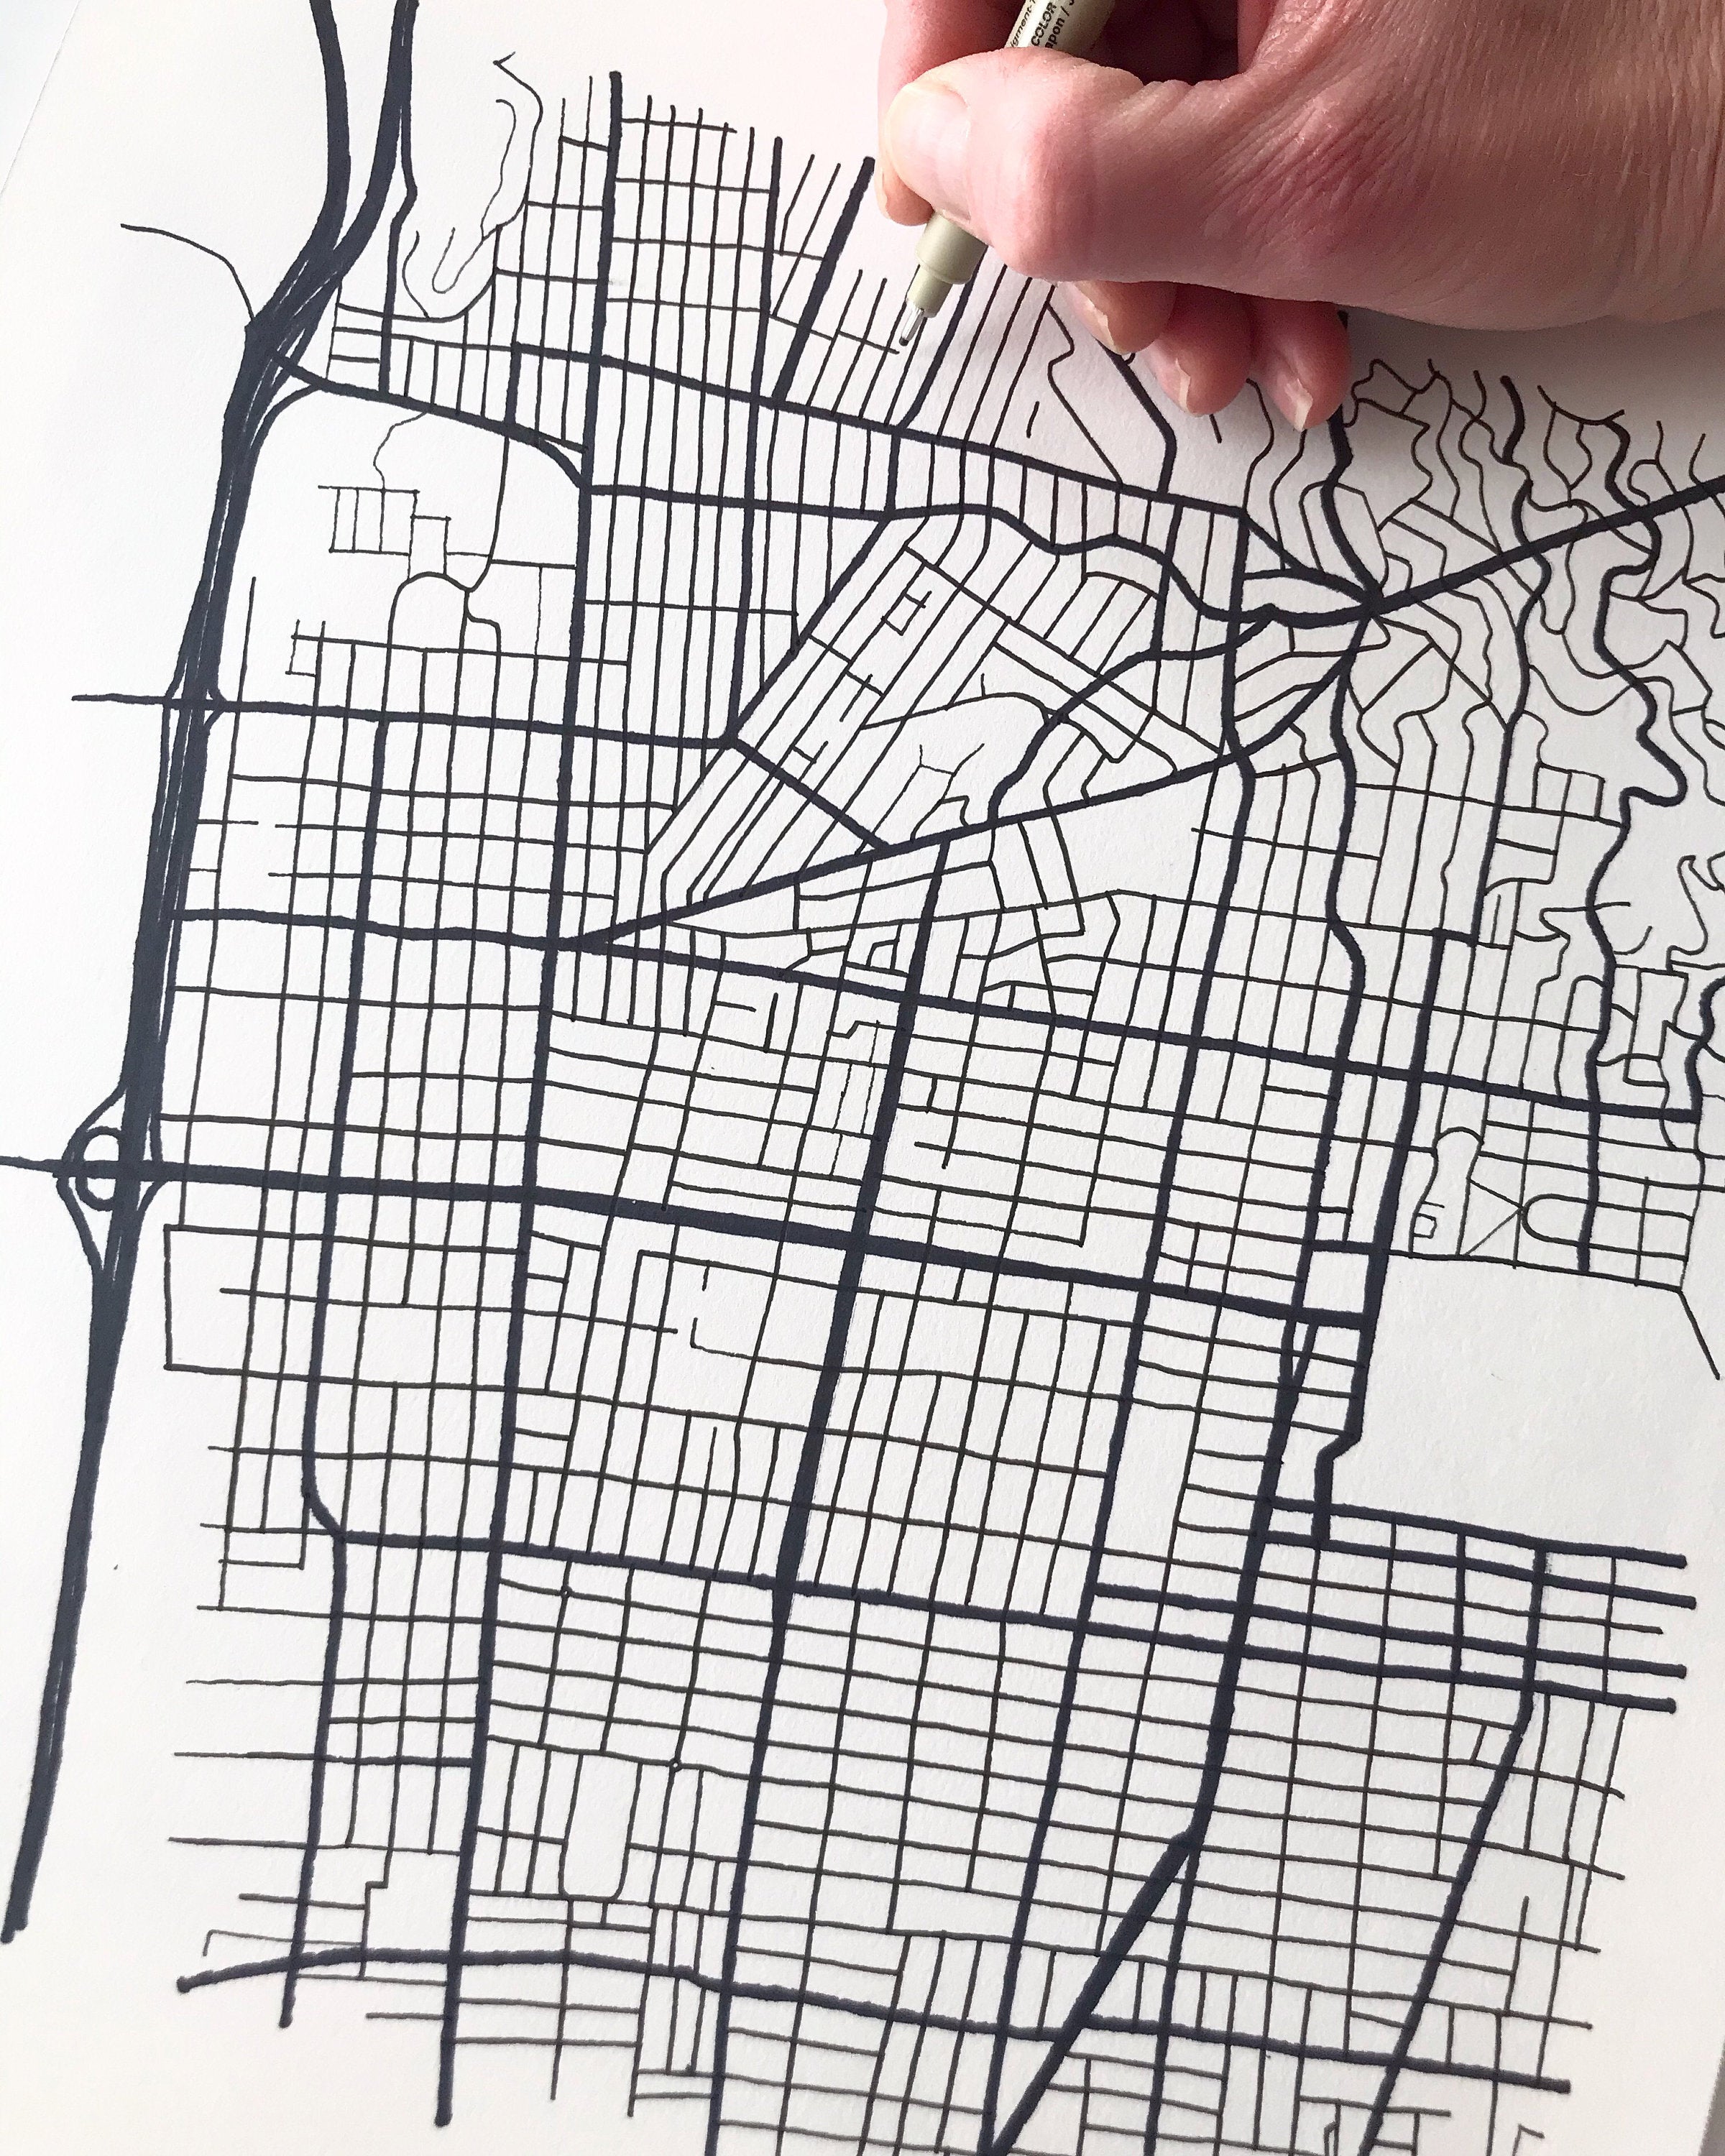 BERKELEY California City Lines Map: PRINT